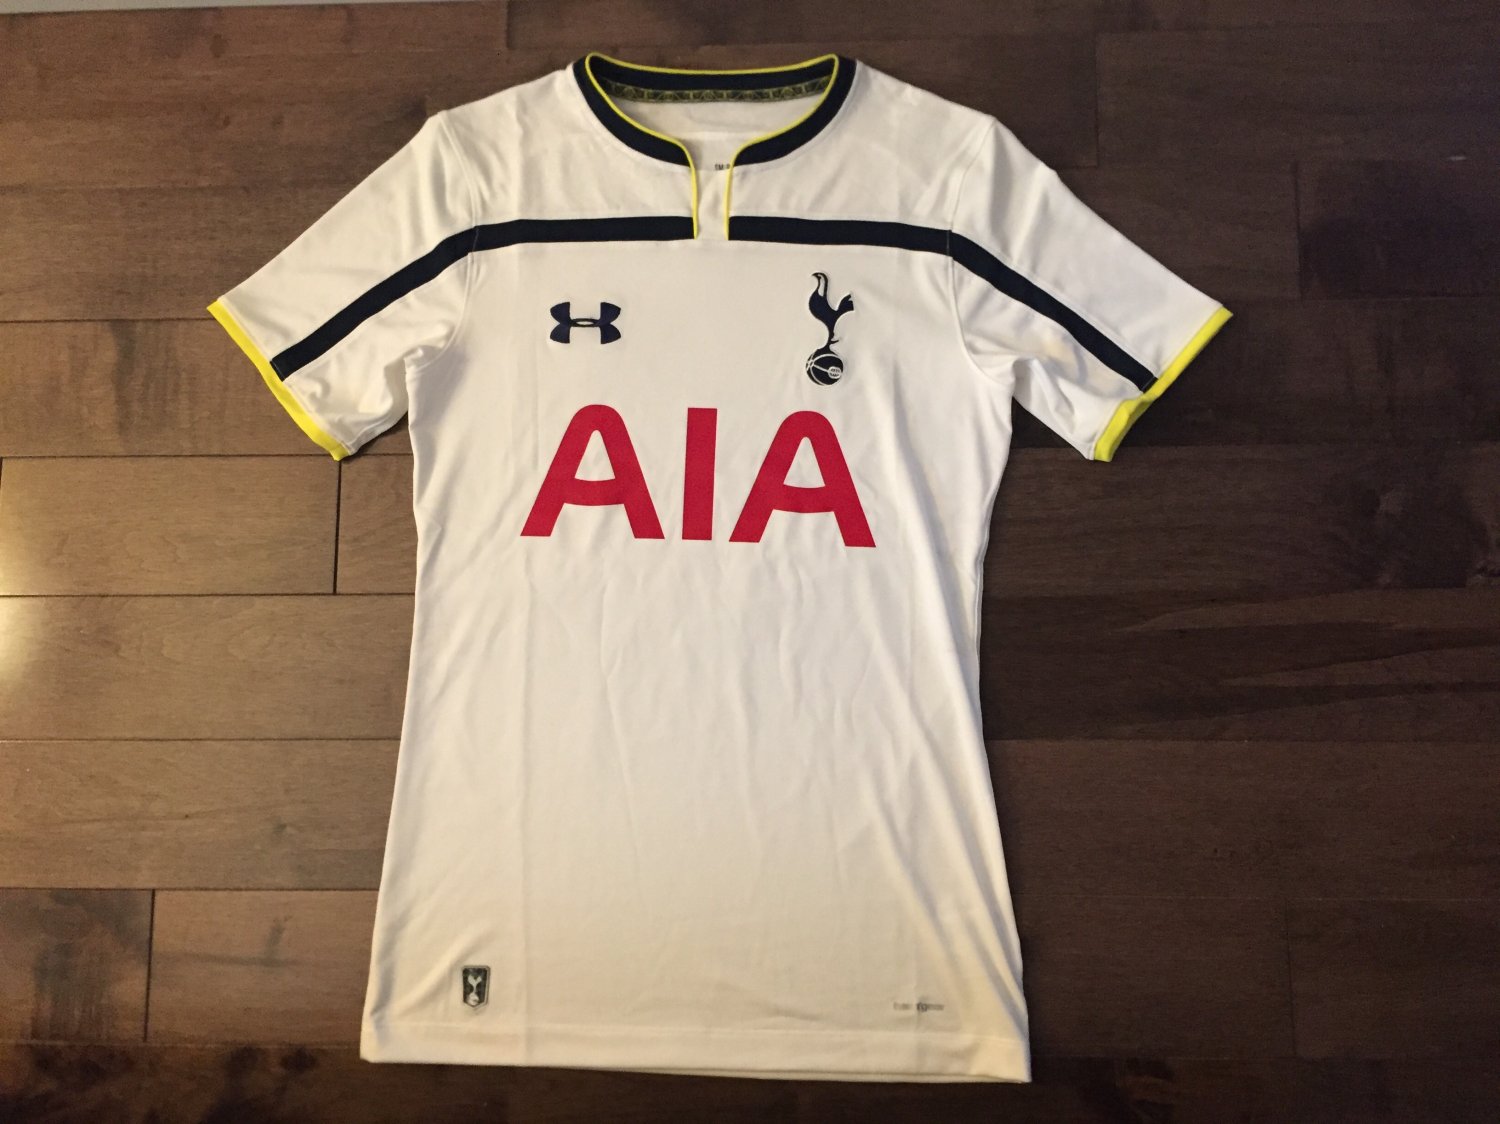 Tottenham Hotspur Home football shirt 2014 - 2015. Sponsored by AIA